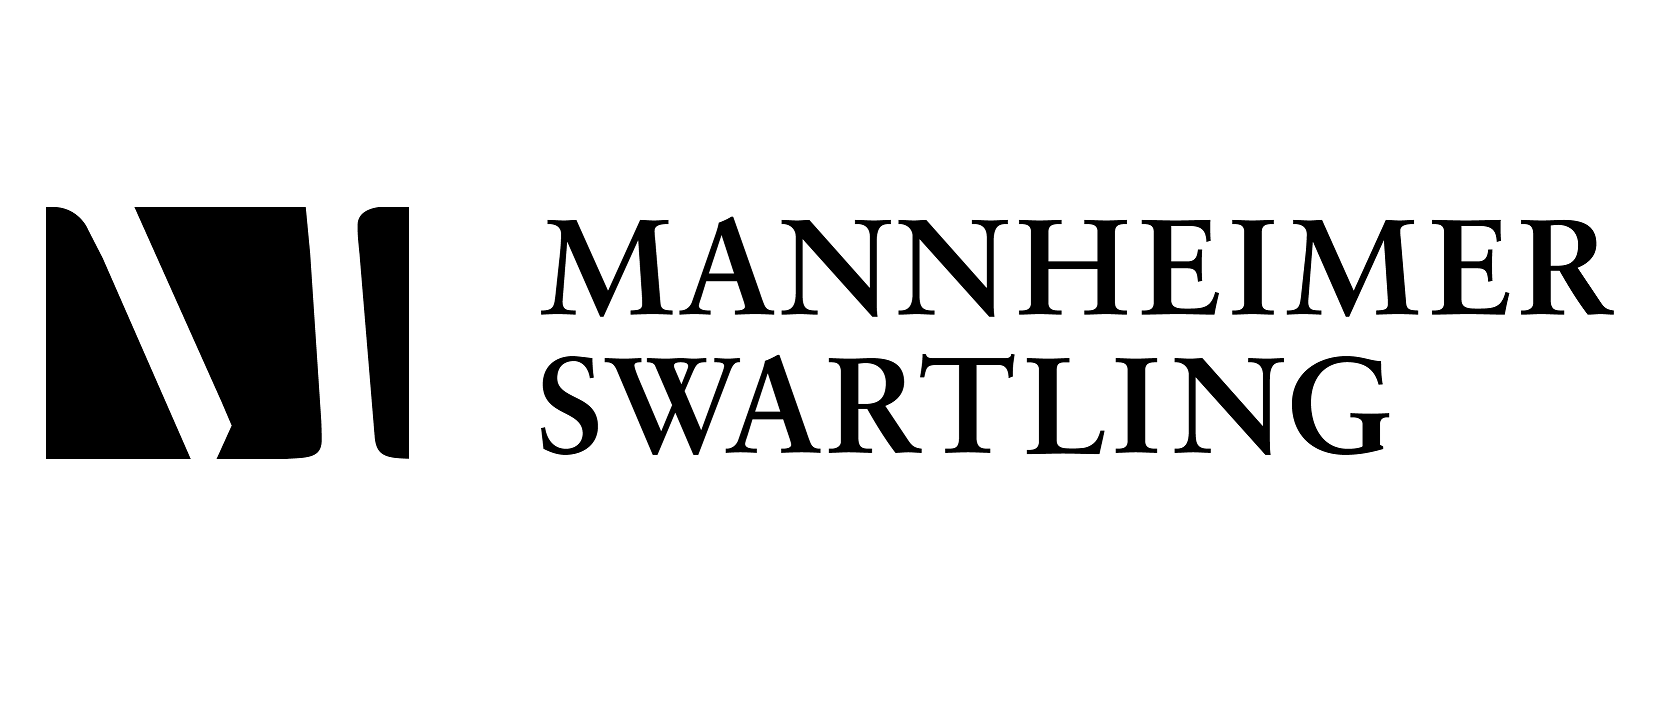 Mannheimer Swartling - The Swedish State Sells 255 Million Shares in Nordea Raising SEK19B